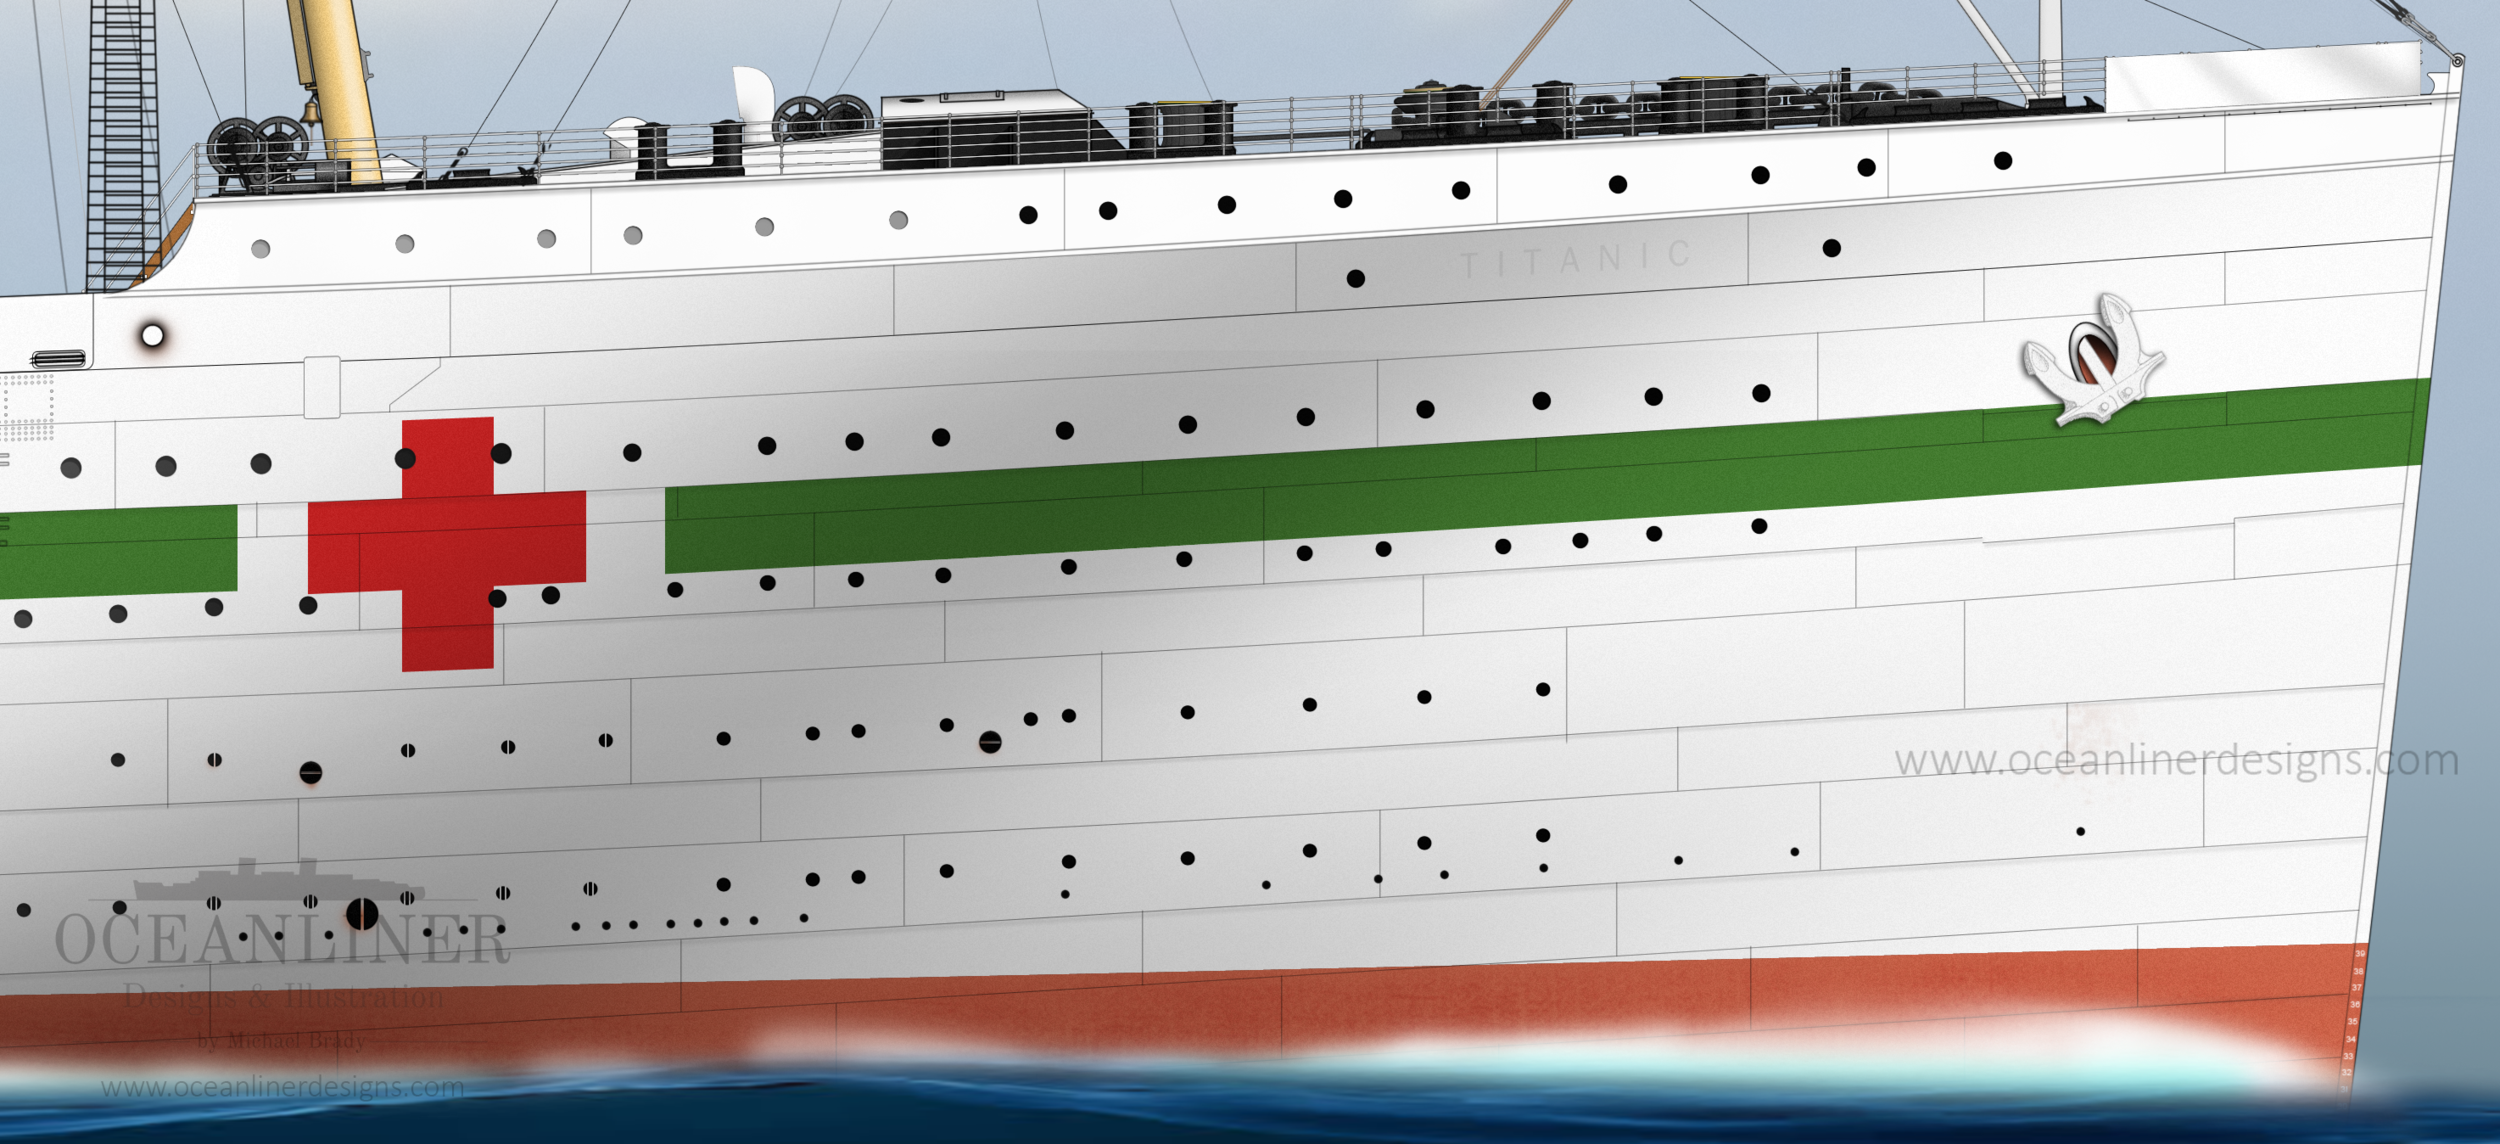 Olympic, British Luxury Liner, Titanic's Sister Ship